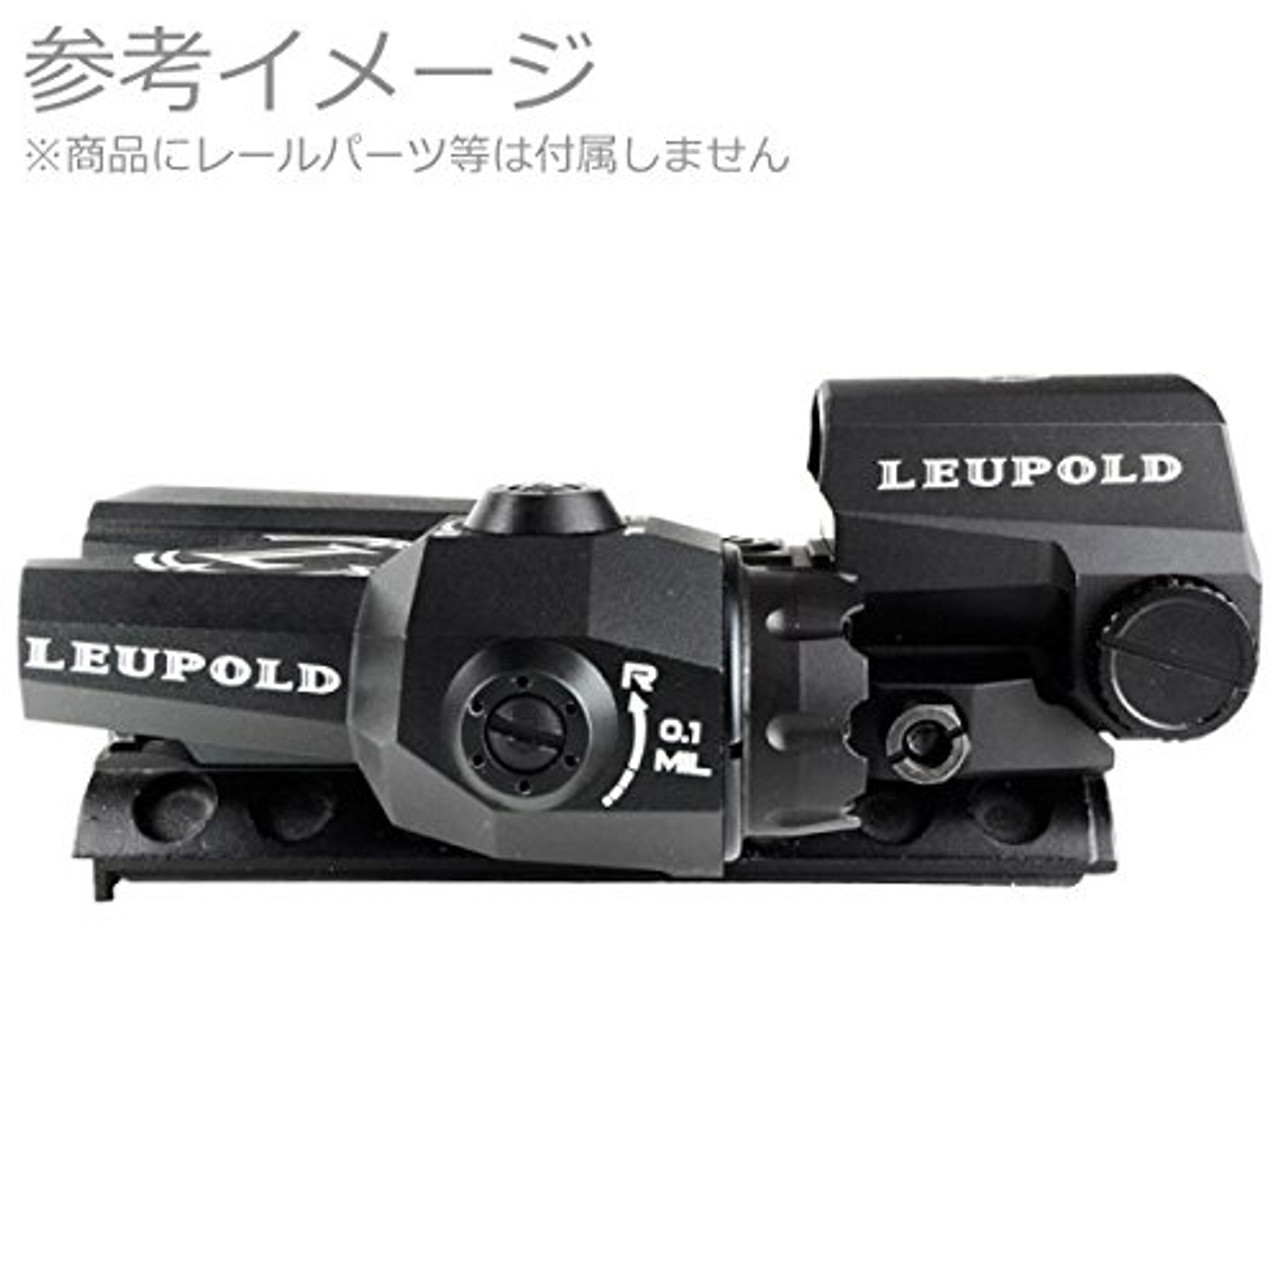 LEUPOLD D-EVO type Scope & LCO type dot sight set - Airsoft Shop Japan